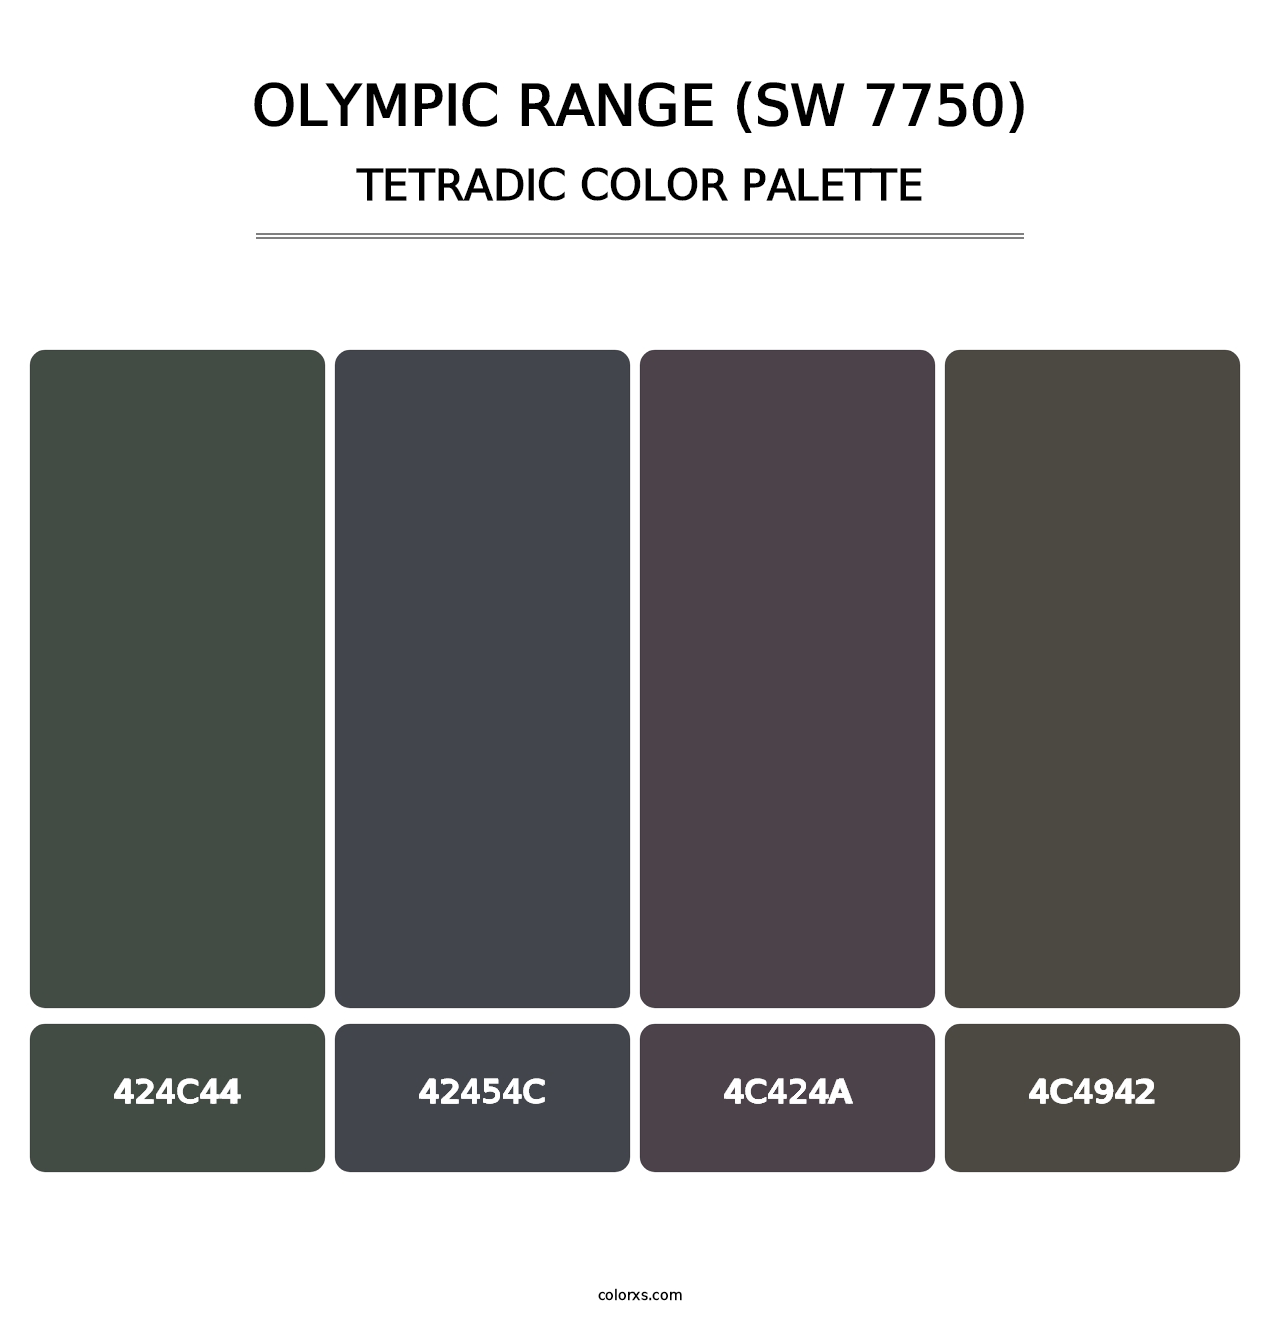 Olympic Range (SW 7750) - Tetradic Color Palette